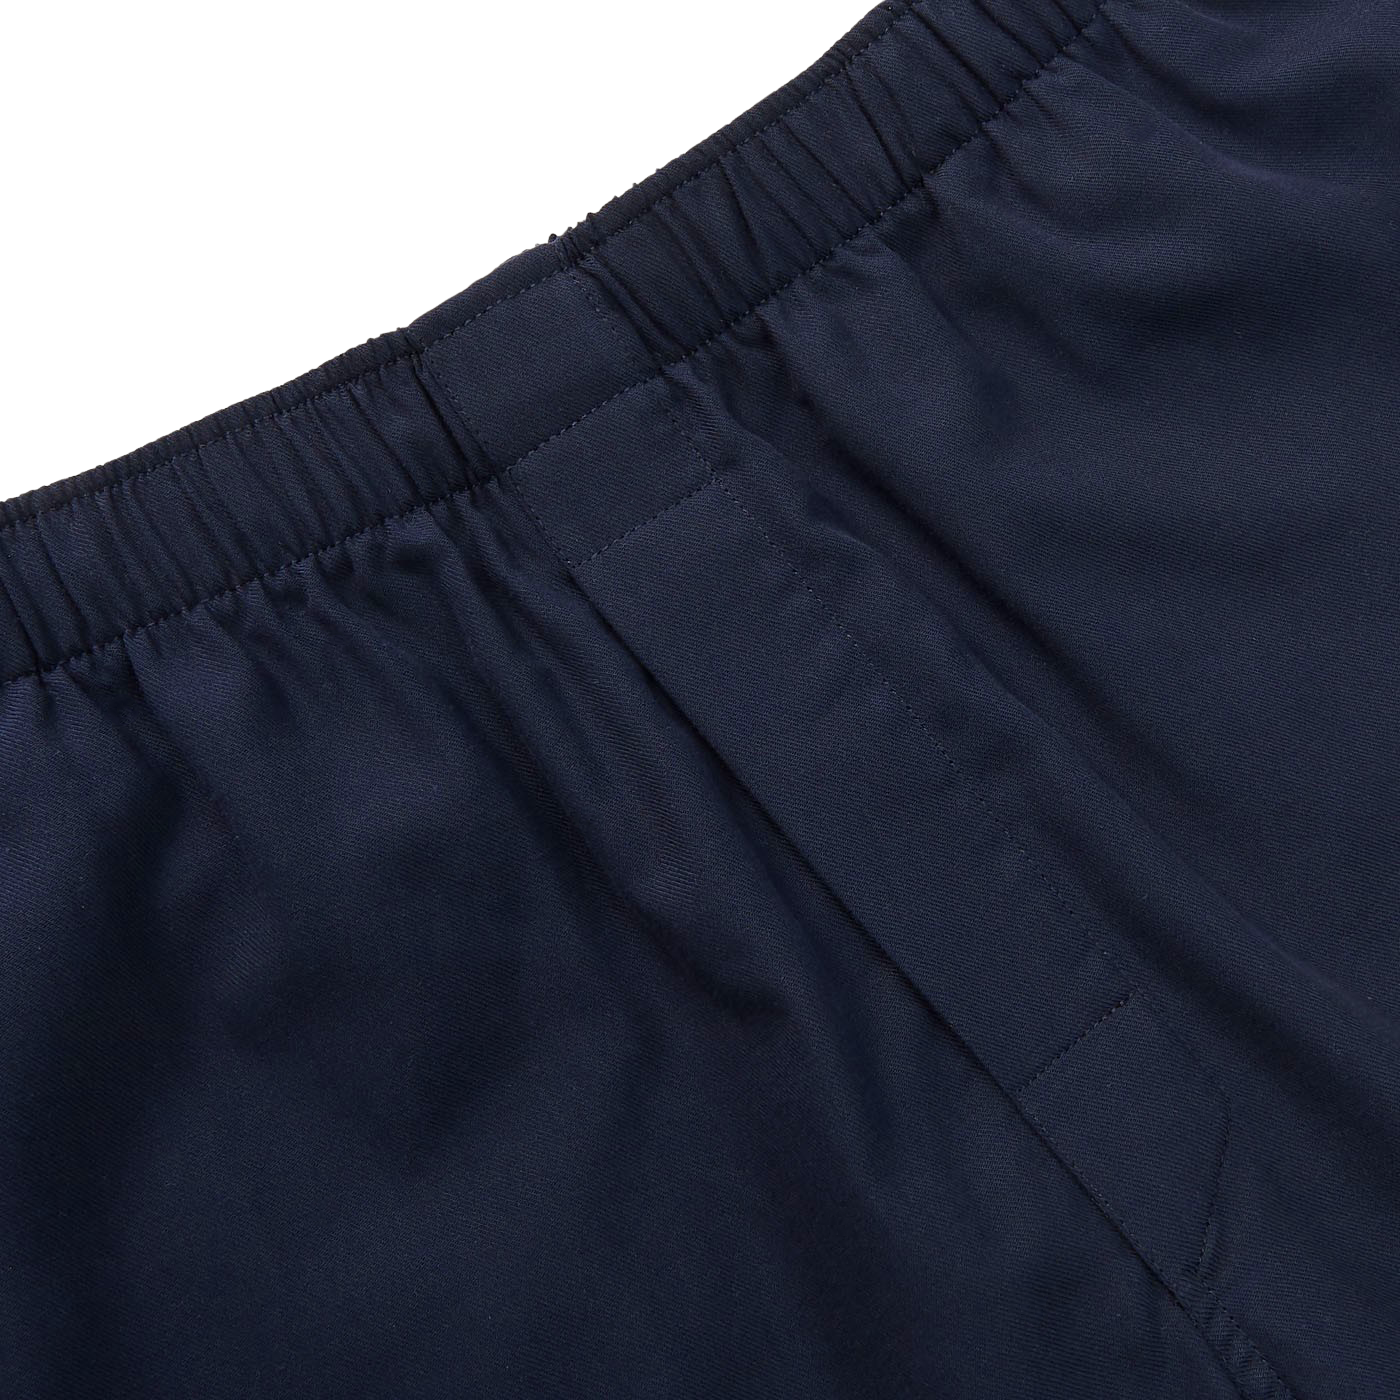 Sunspel Navy Blue Cotton Twill Pyjamas Trousers Zipper